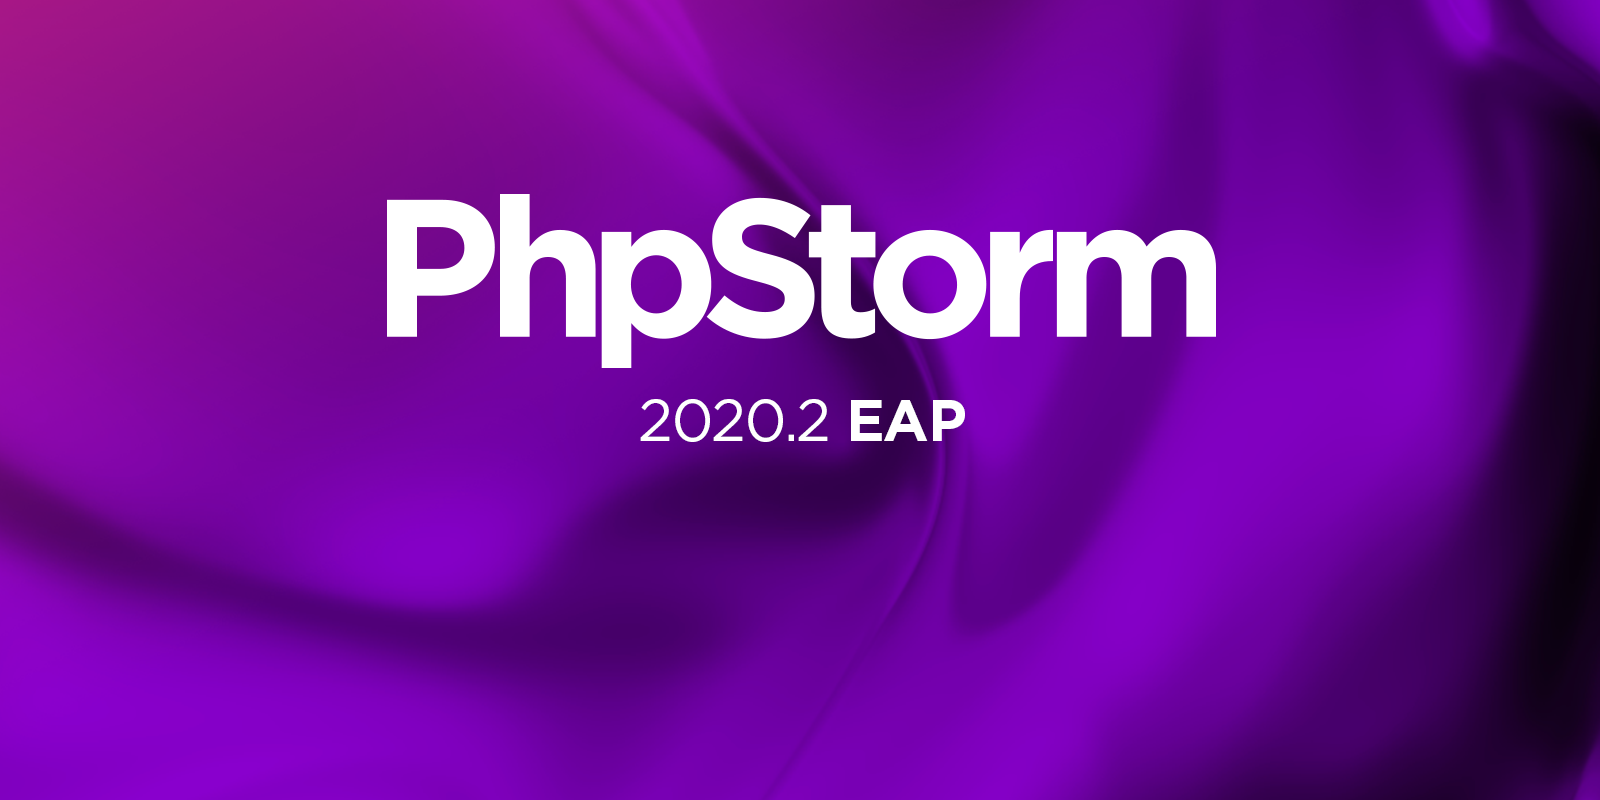 PhpStorm 2020.2 EAP